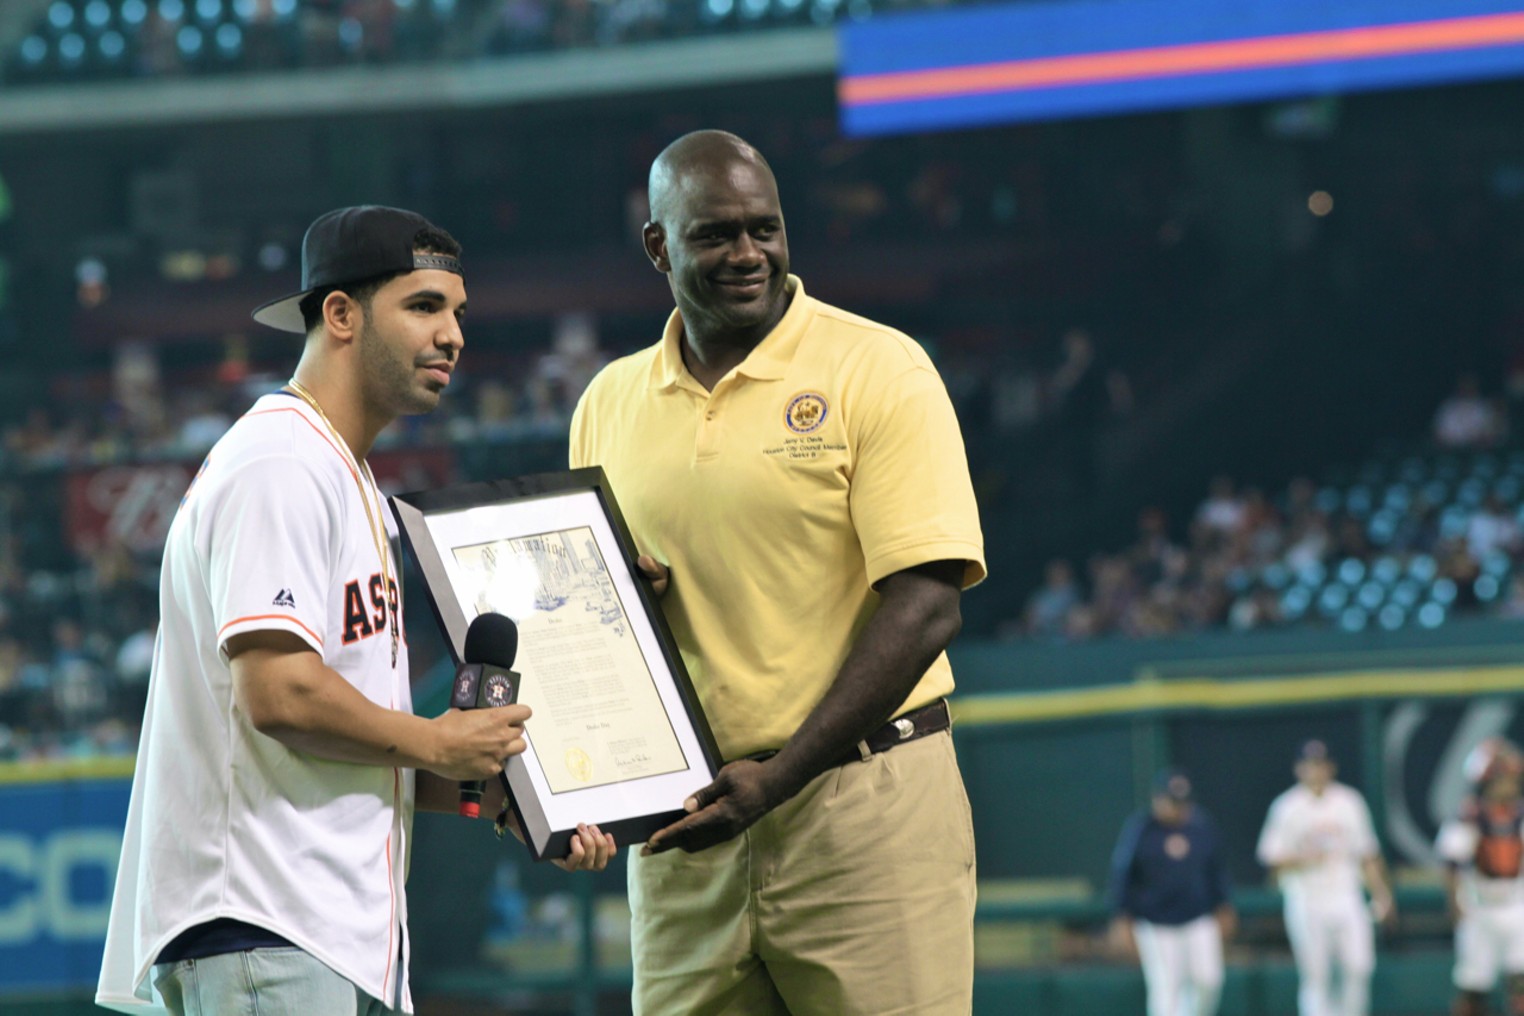 Drake and Friends Celebrate Houston Appreciation Weekend, Houston, Houston  Press